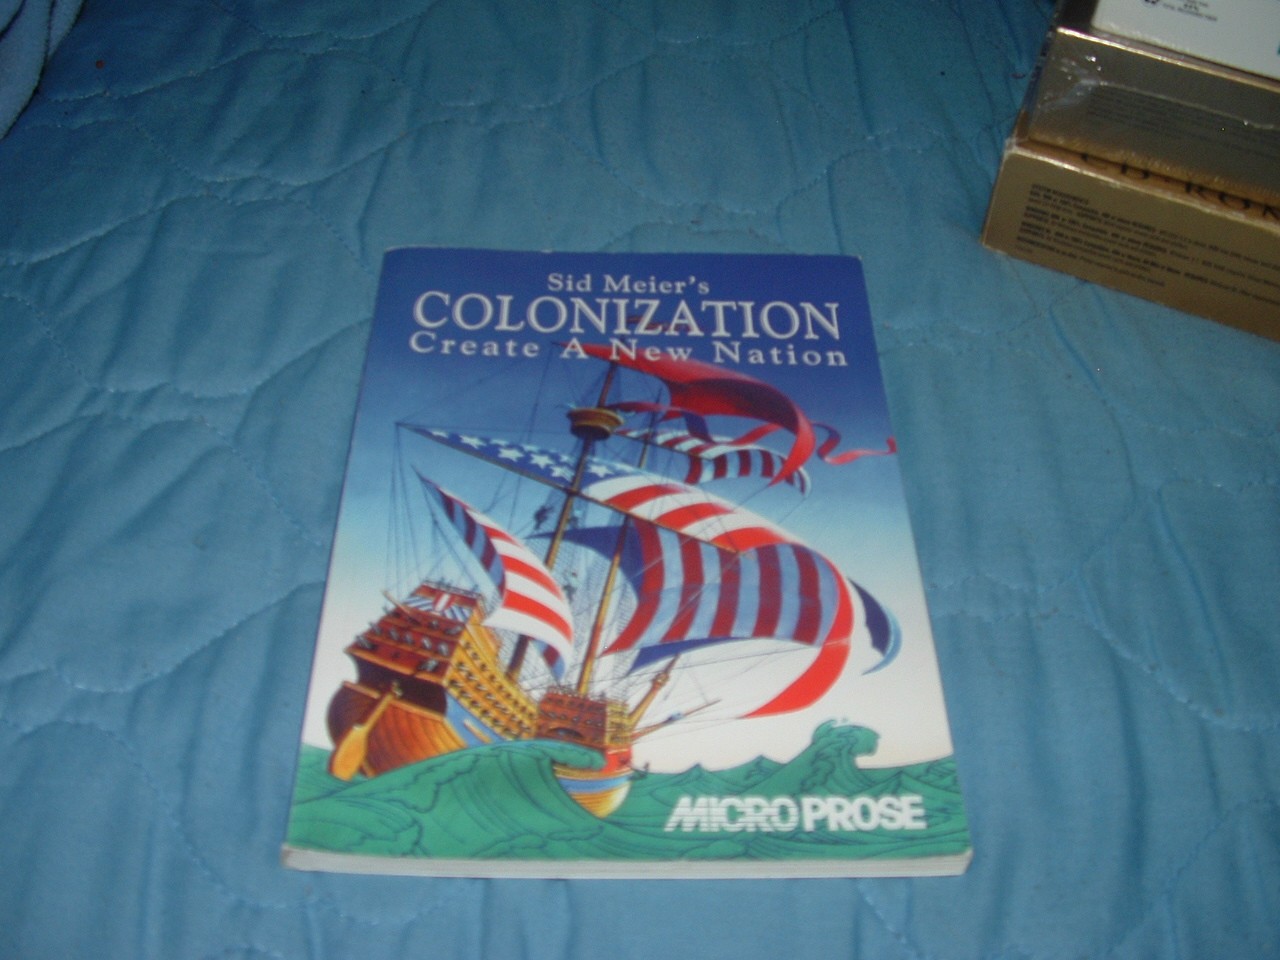 Colonization Manual